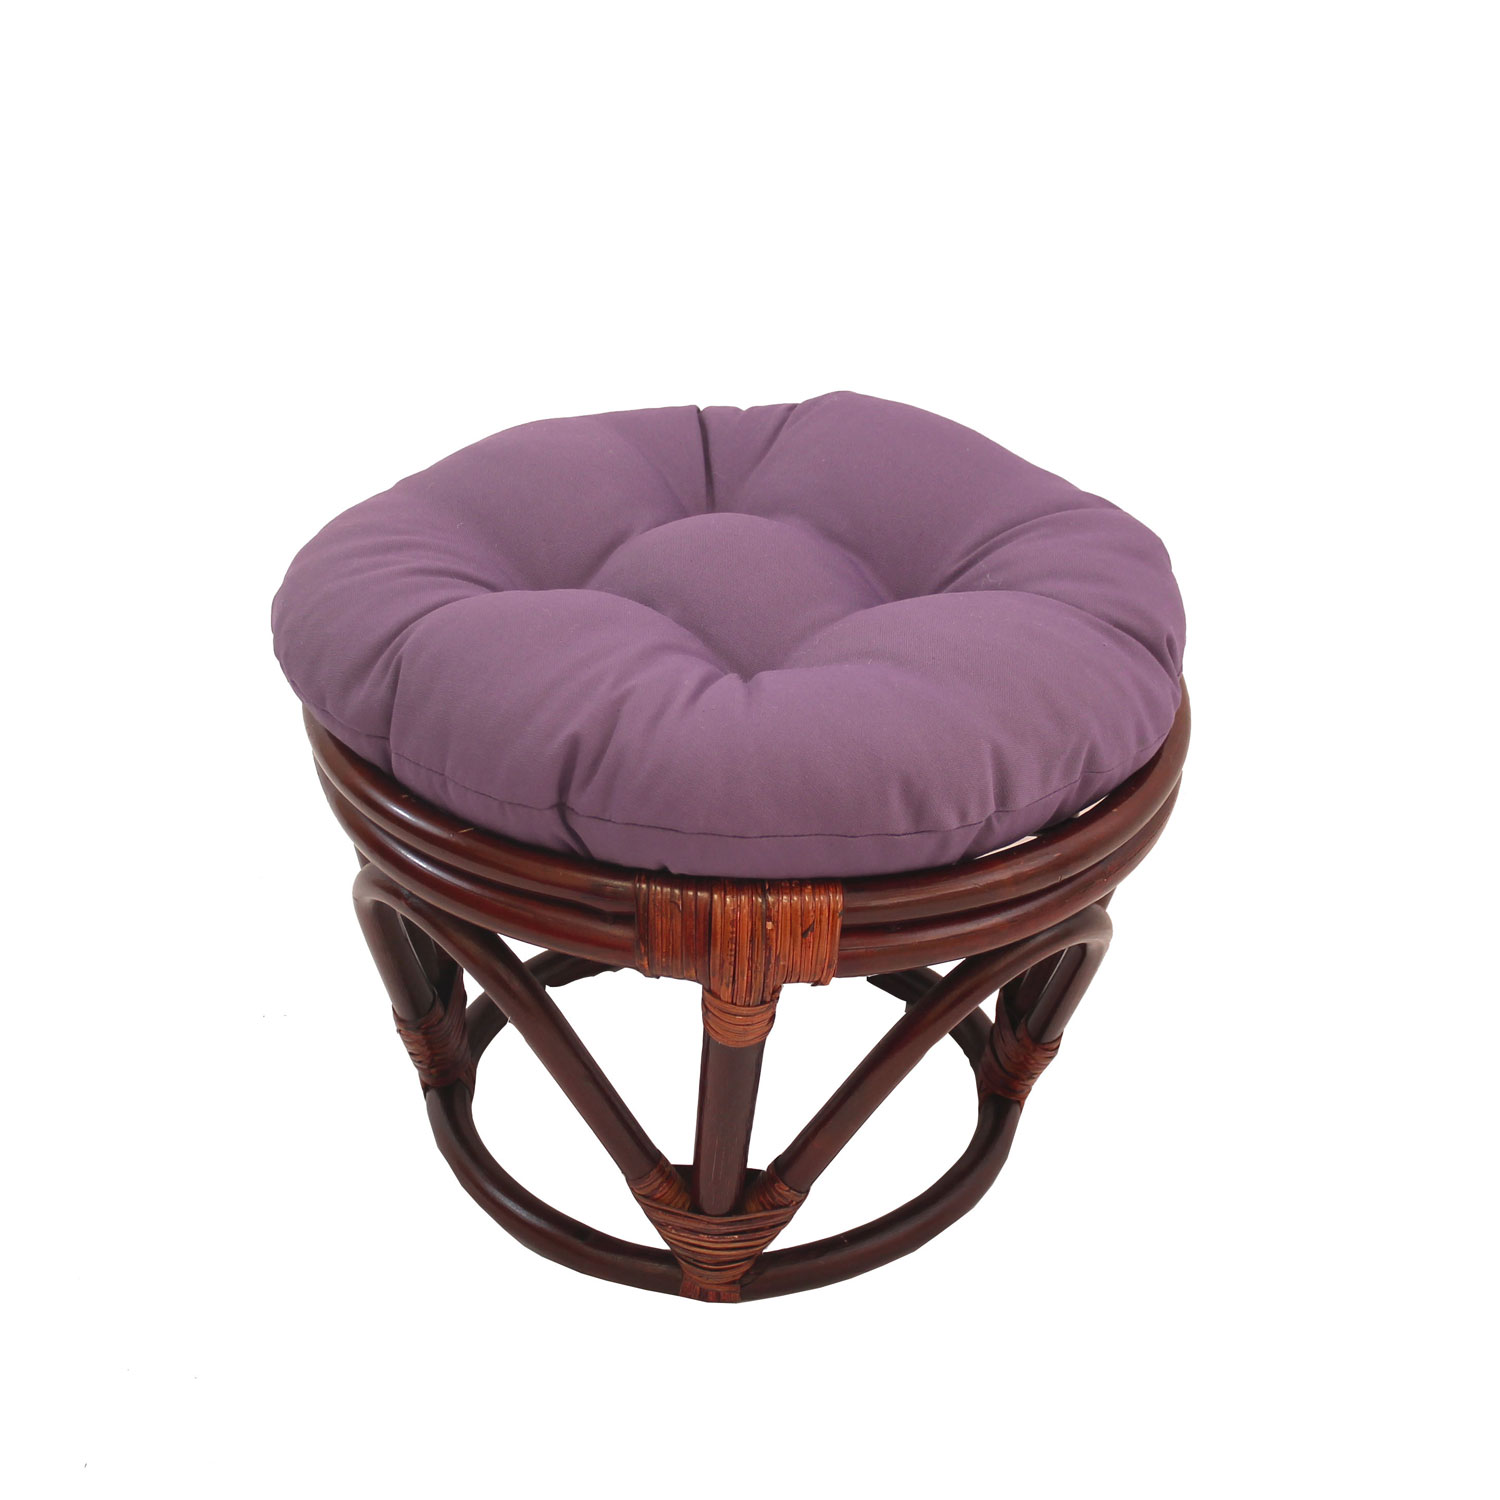 Rattan Footstool With Twill Cushion, Grape